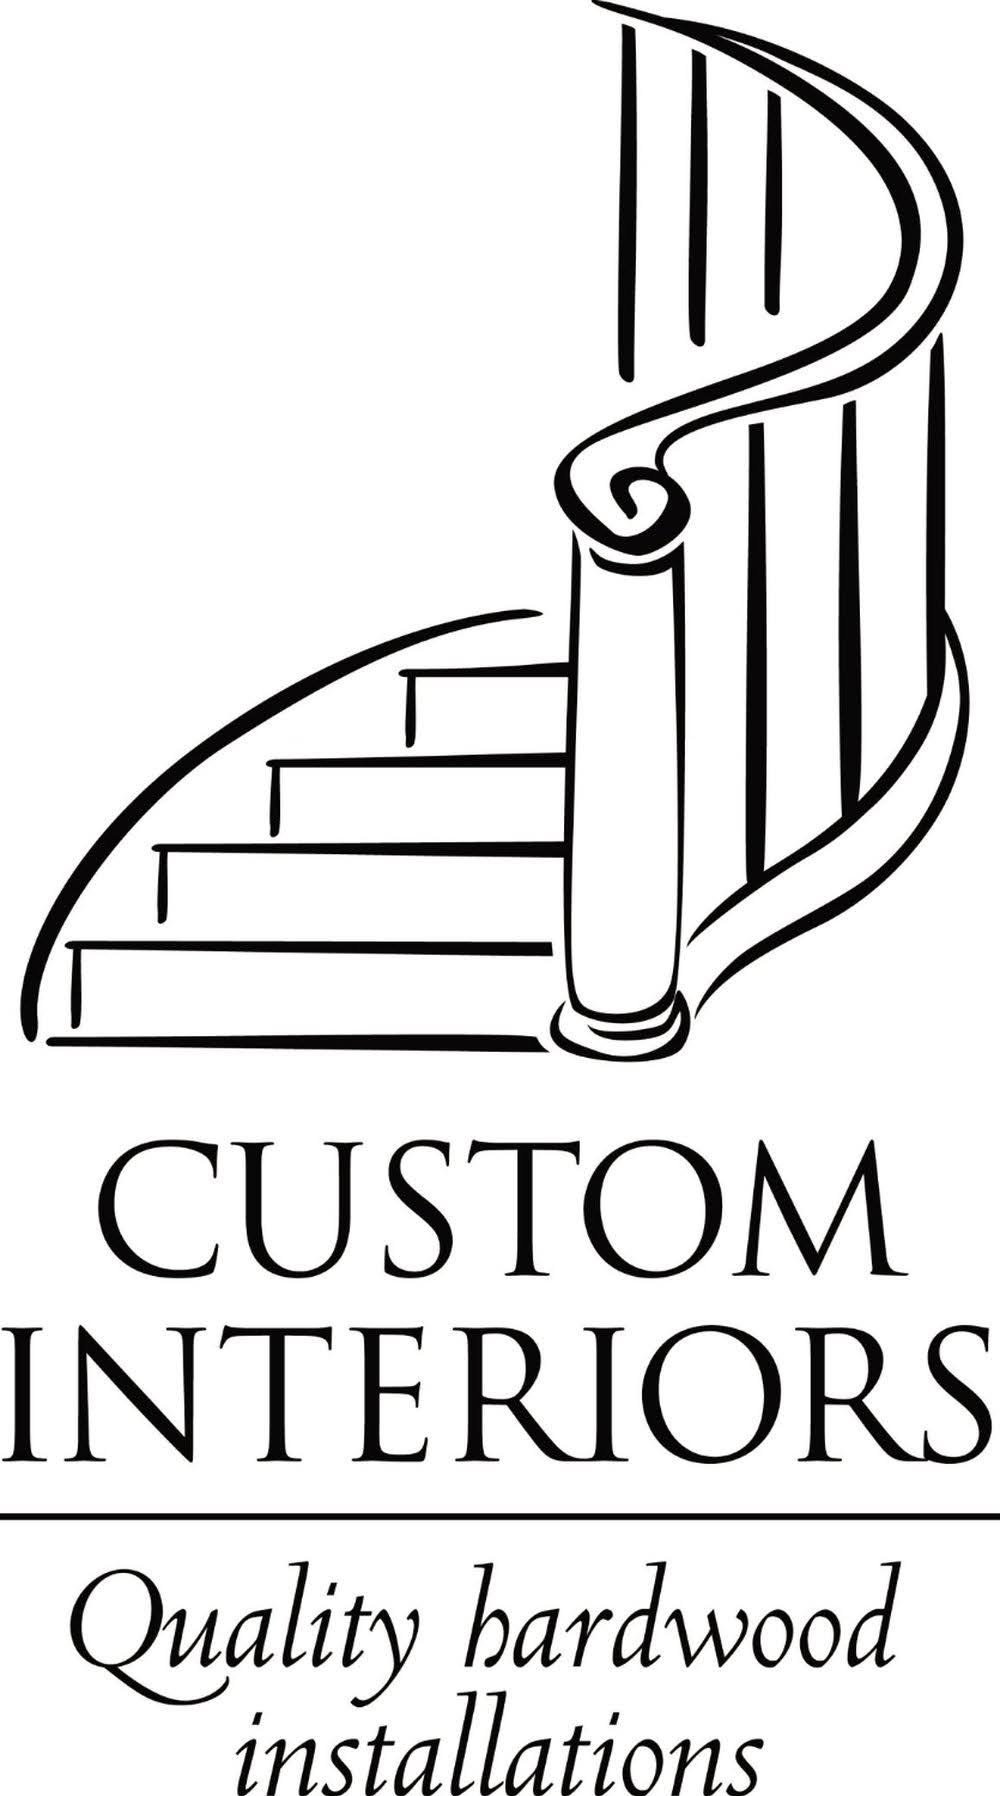 Custom Interiors, Inc